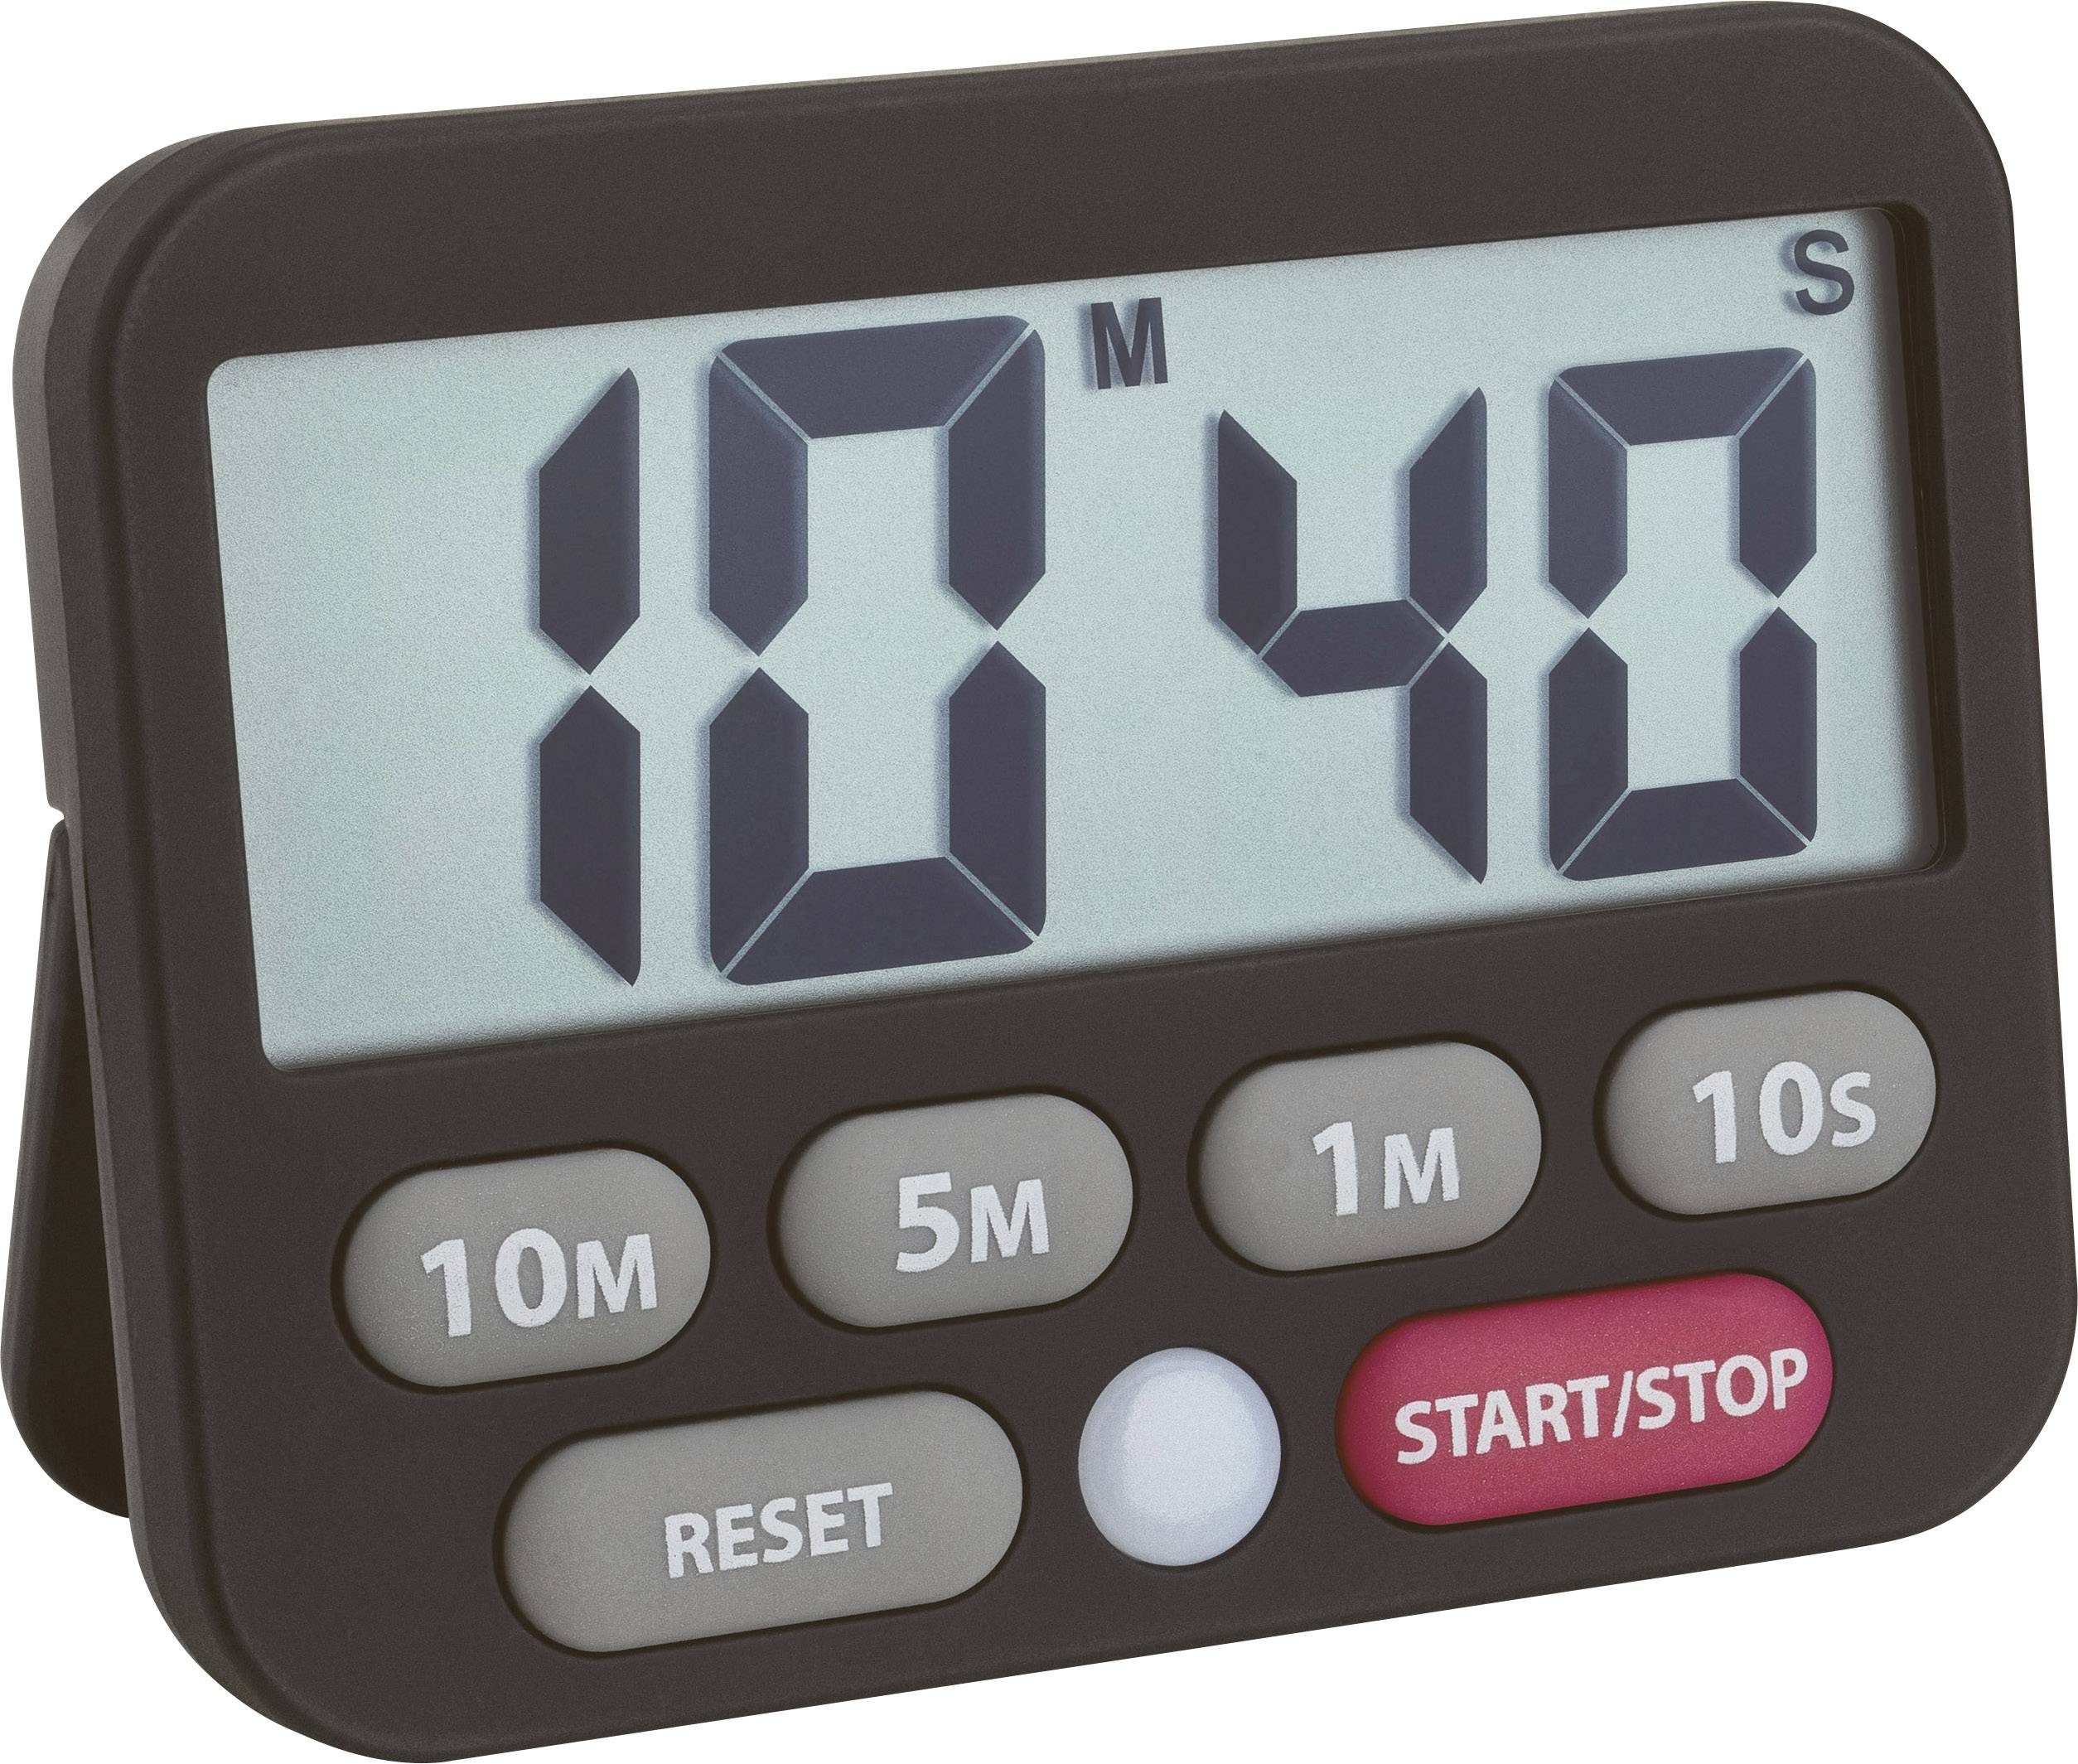 TFA Dostmann Minuterie Digital avec chronomètre, noir